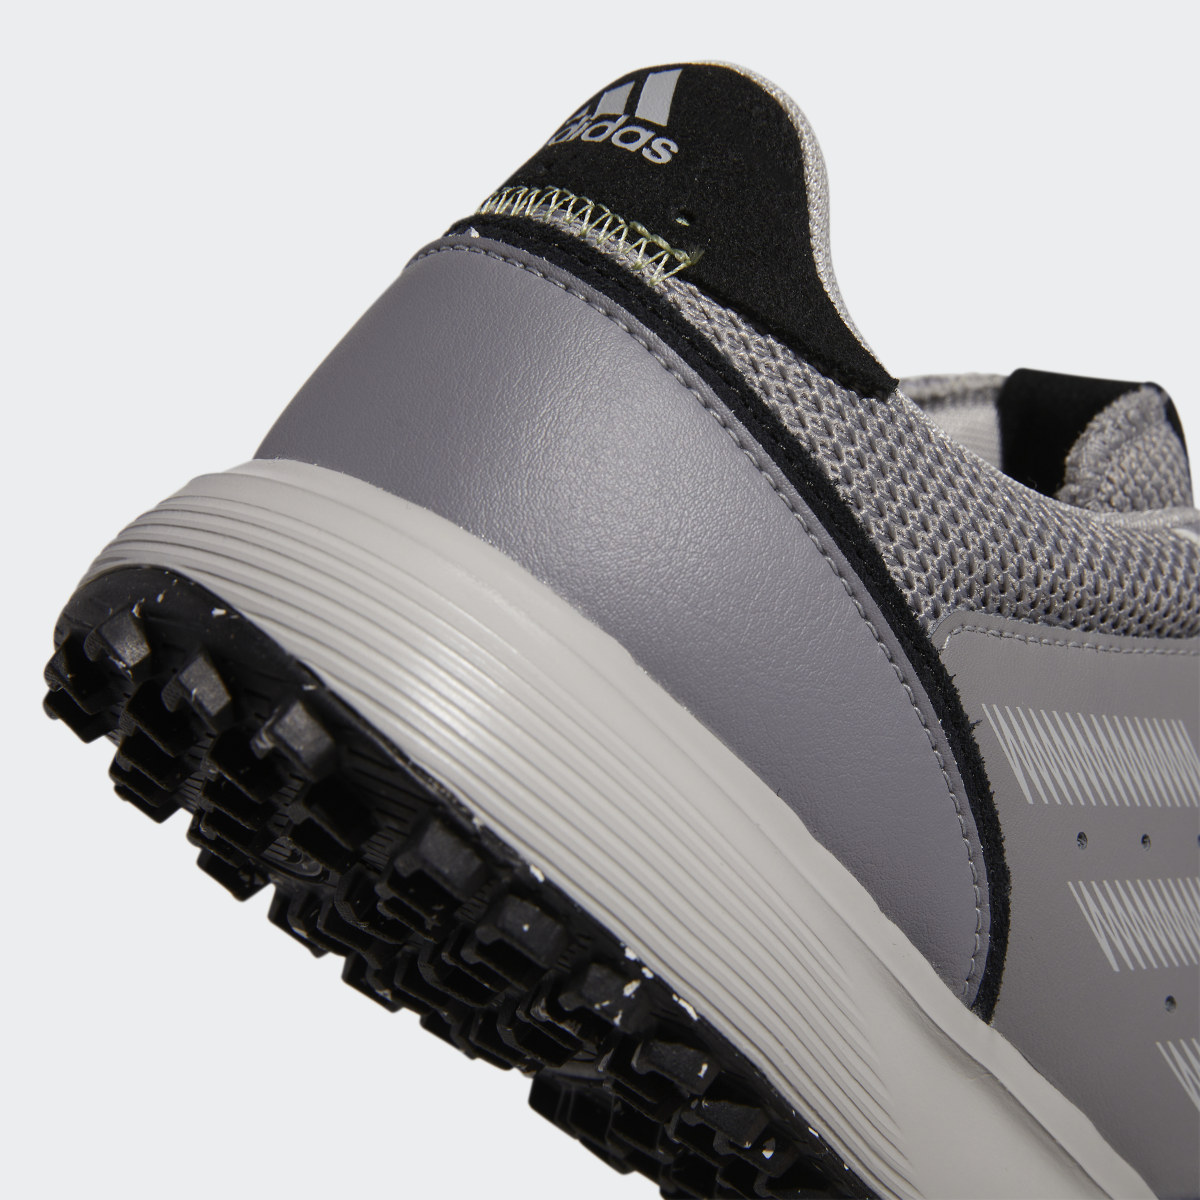 Adidas Zapatilla de golf S2G Spikeless Leather. 9